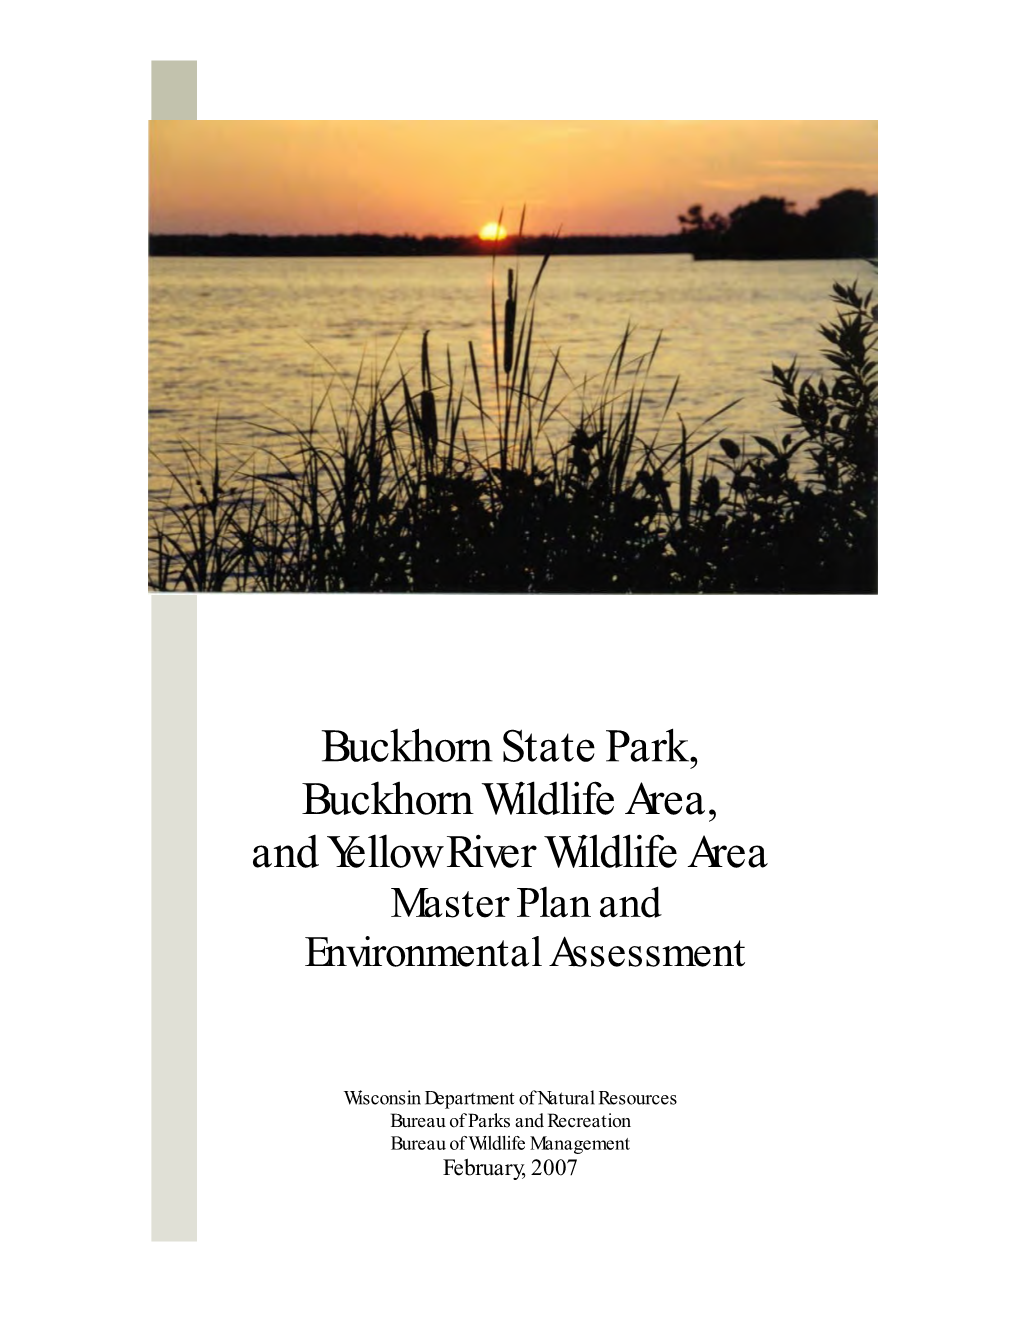 Buckhorn State Park. Buckhorn Wildlife Area, and Yellow River